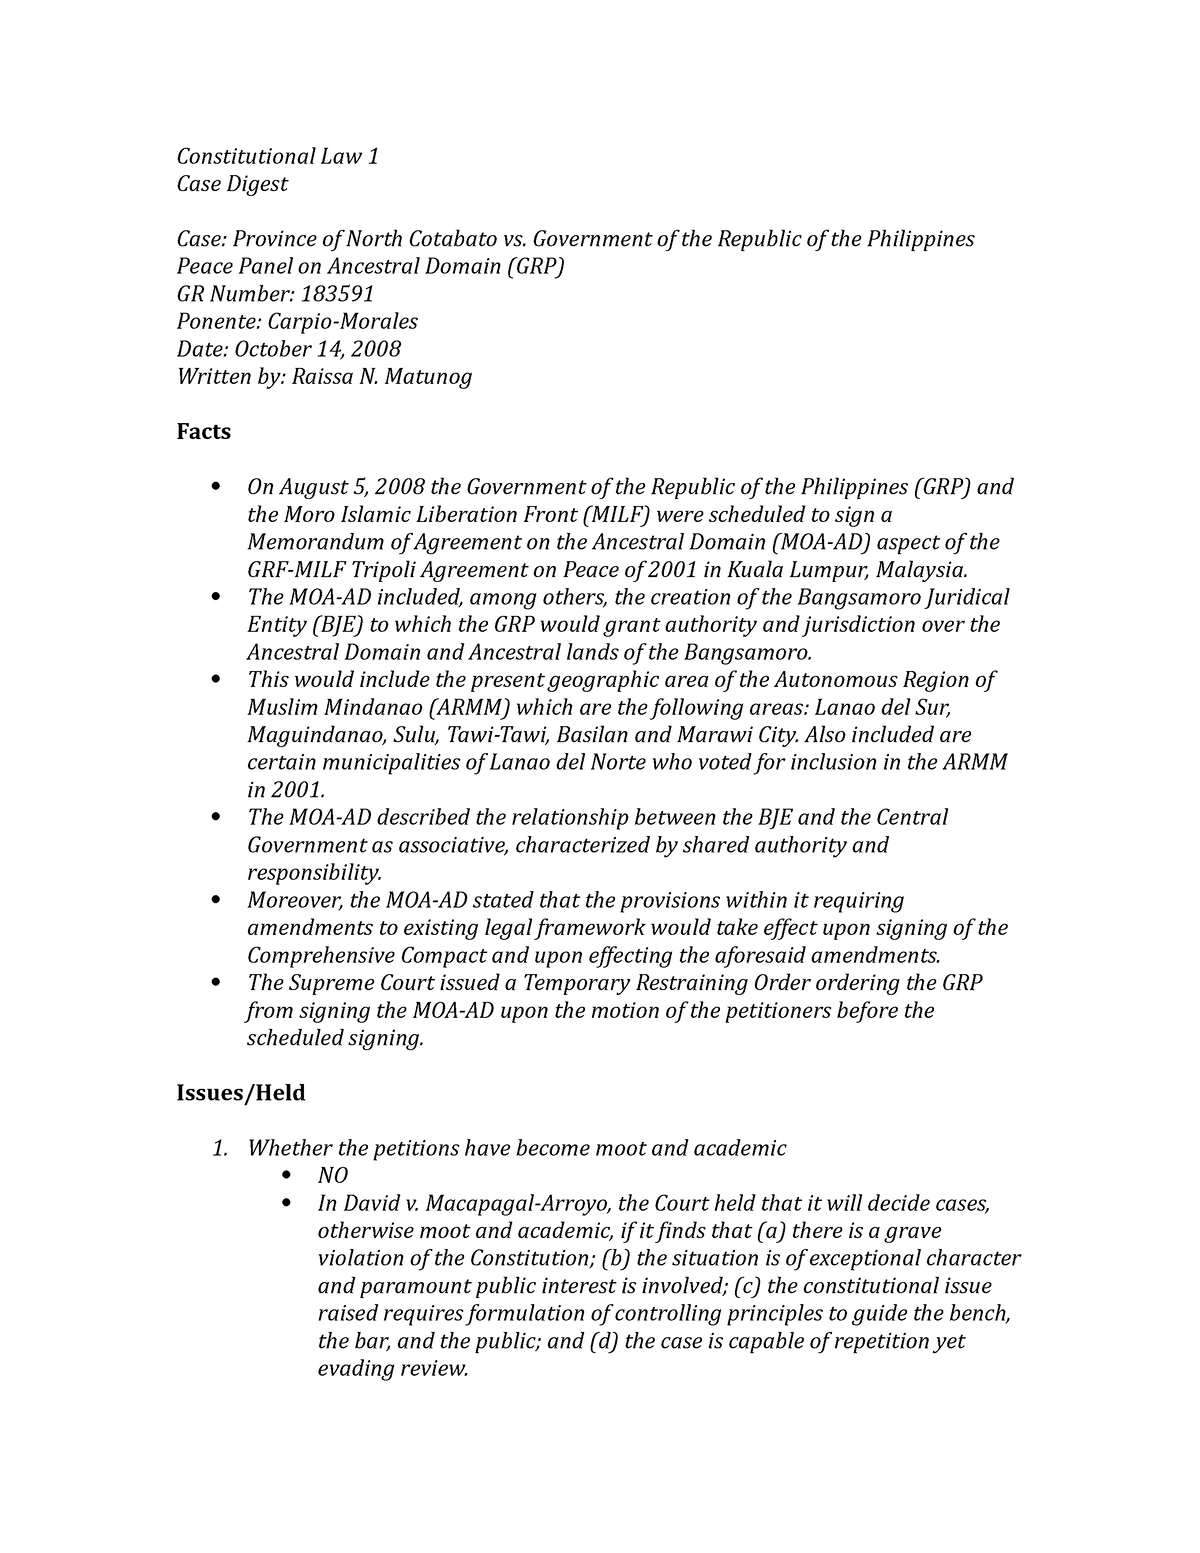 Province of North Cotabato vs GRP - Government of the Republic of the ...